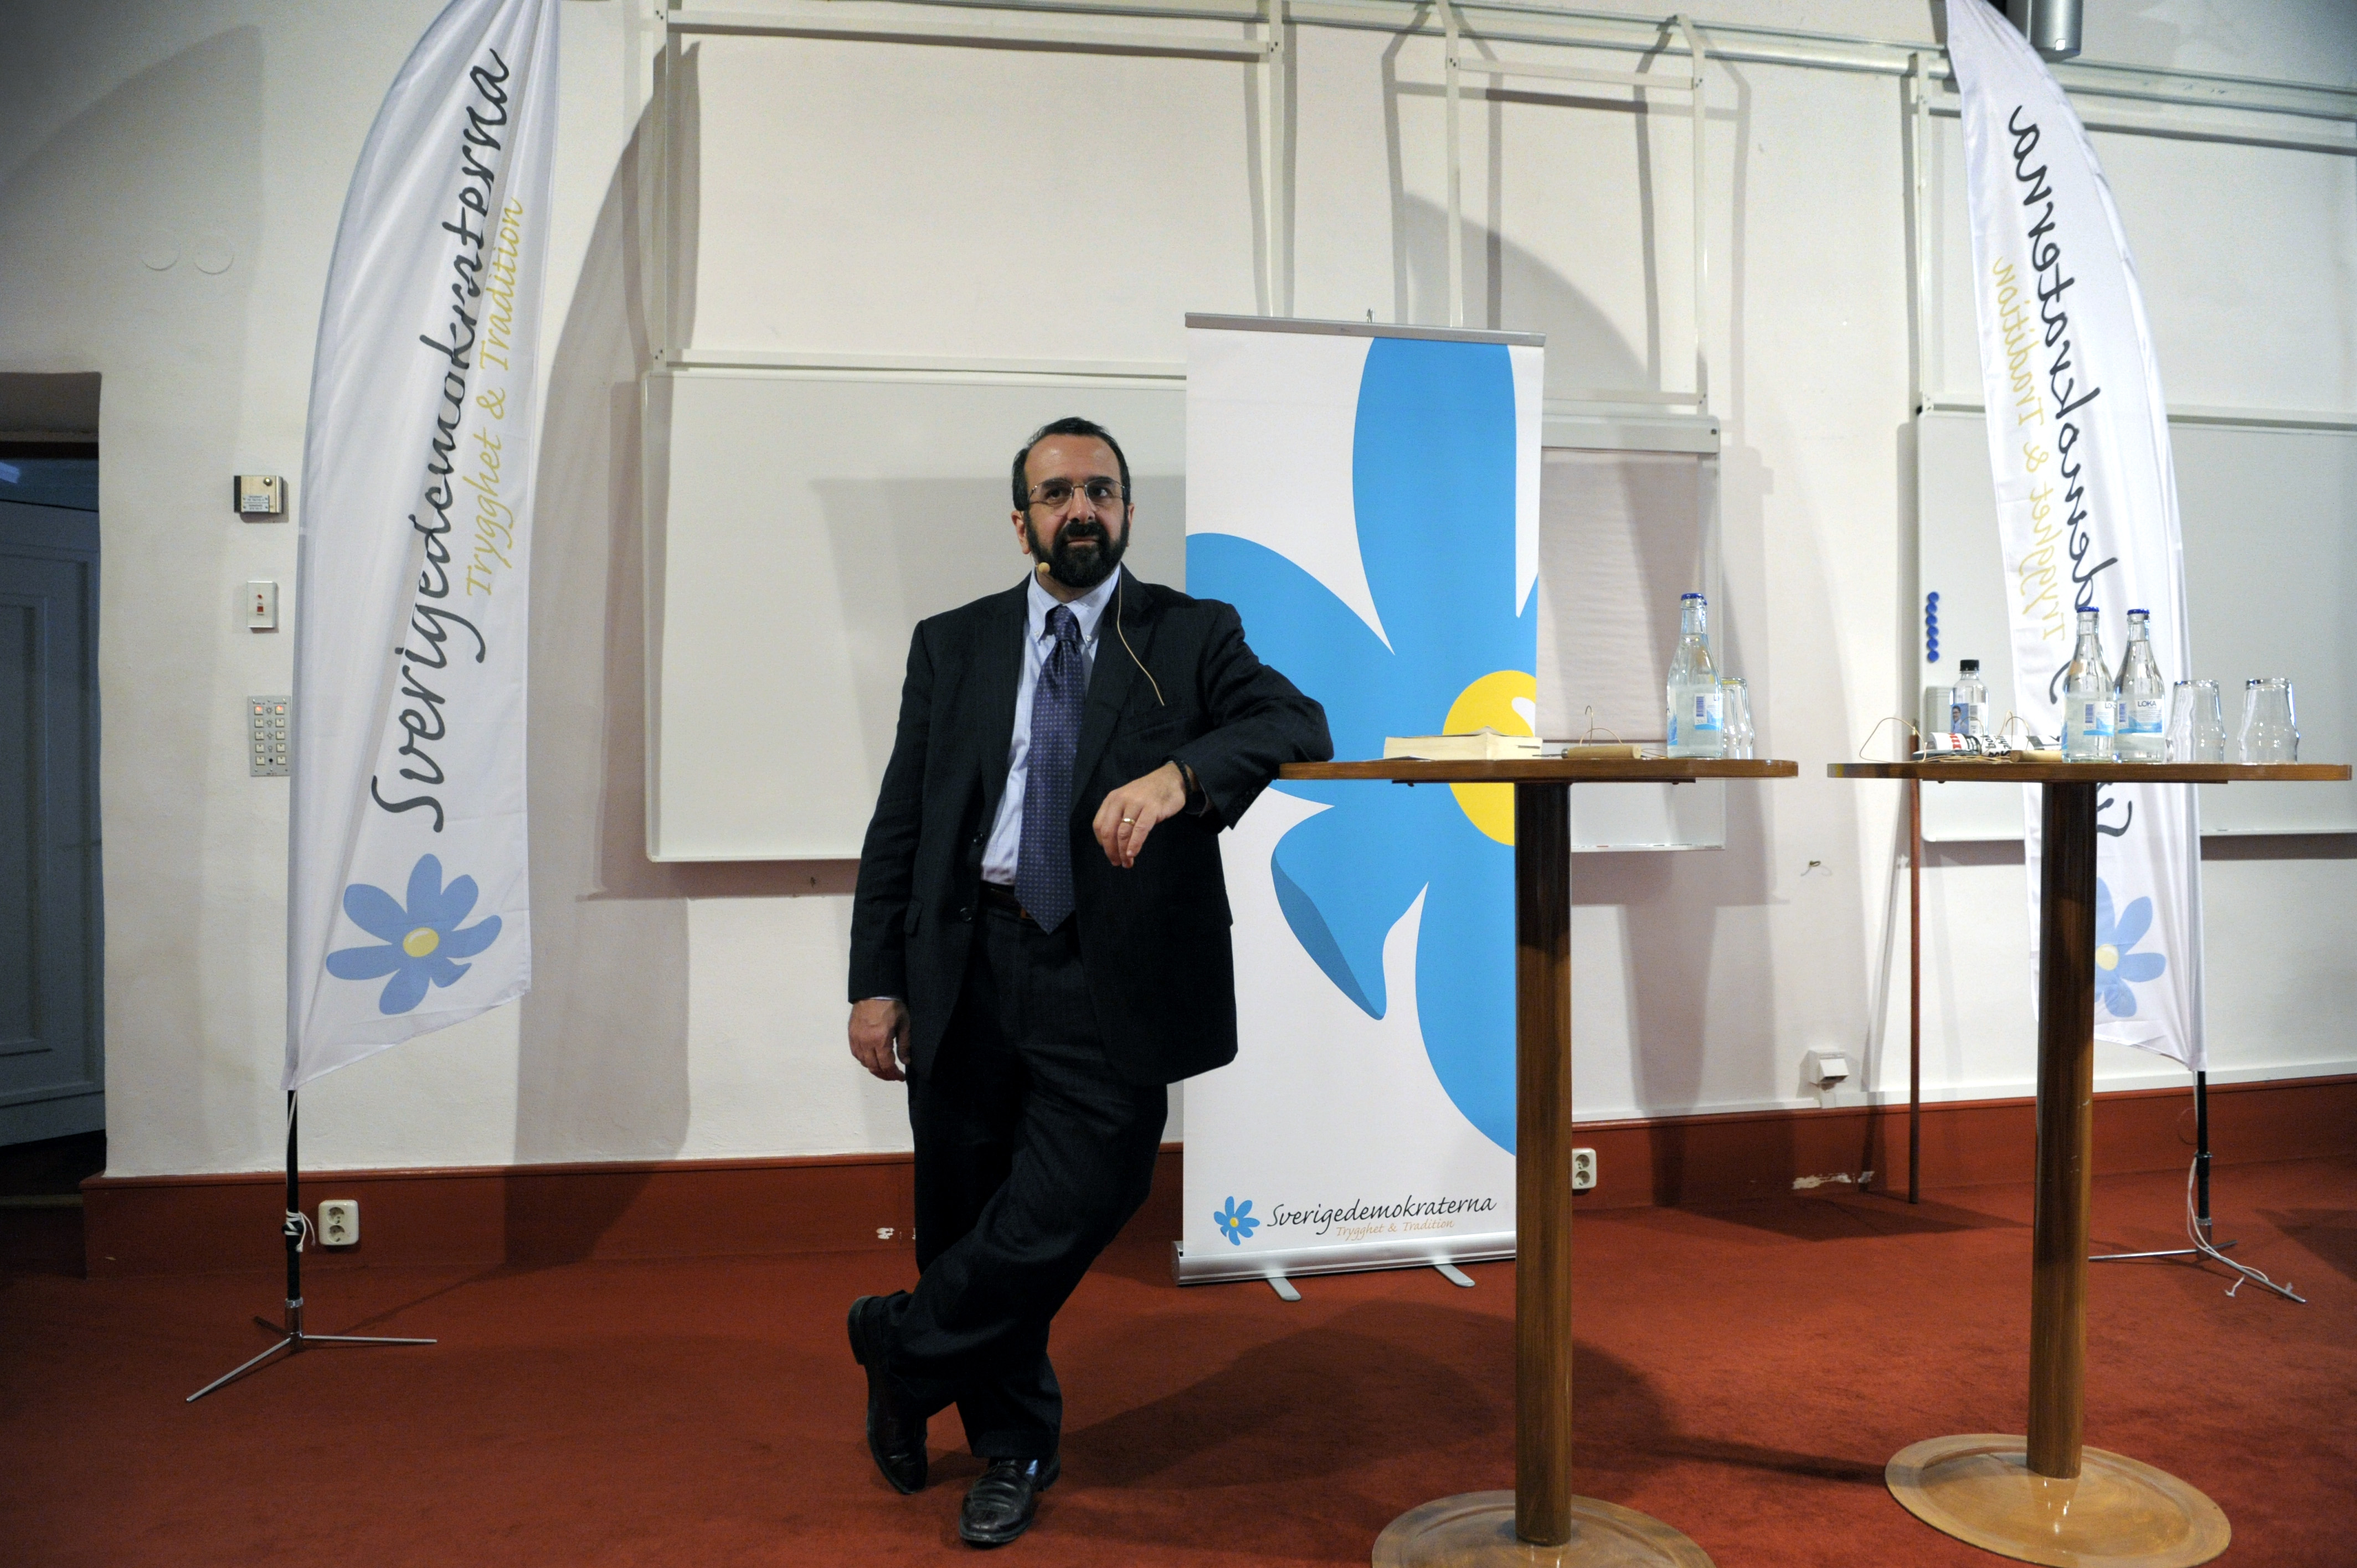 Riksdagsvalet 2010, Sverigedemokraterna, Almedalen, Robert Spencer, Islam